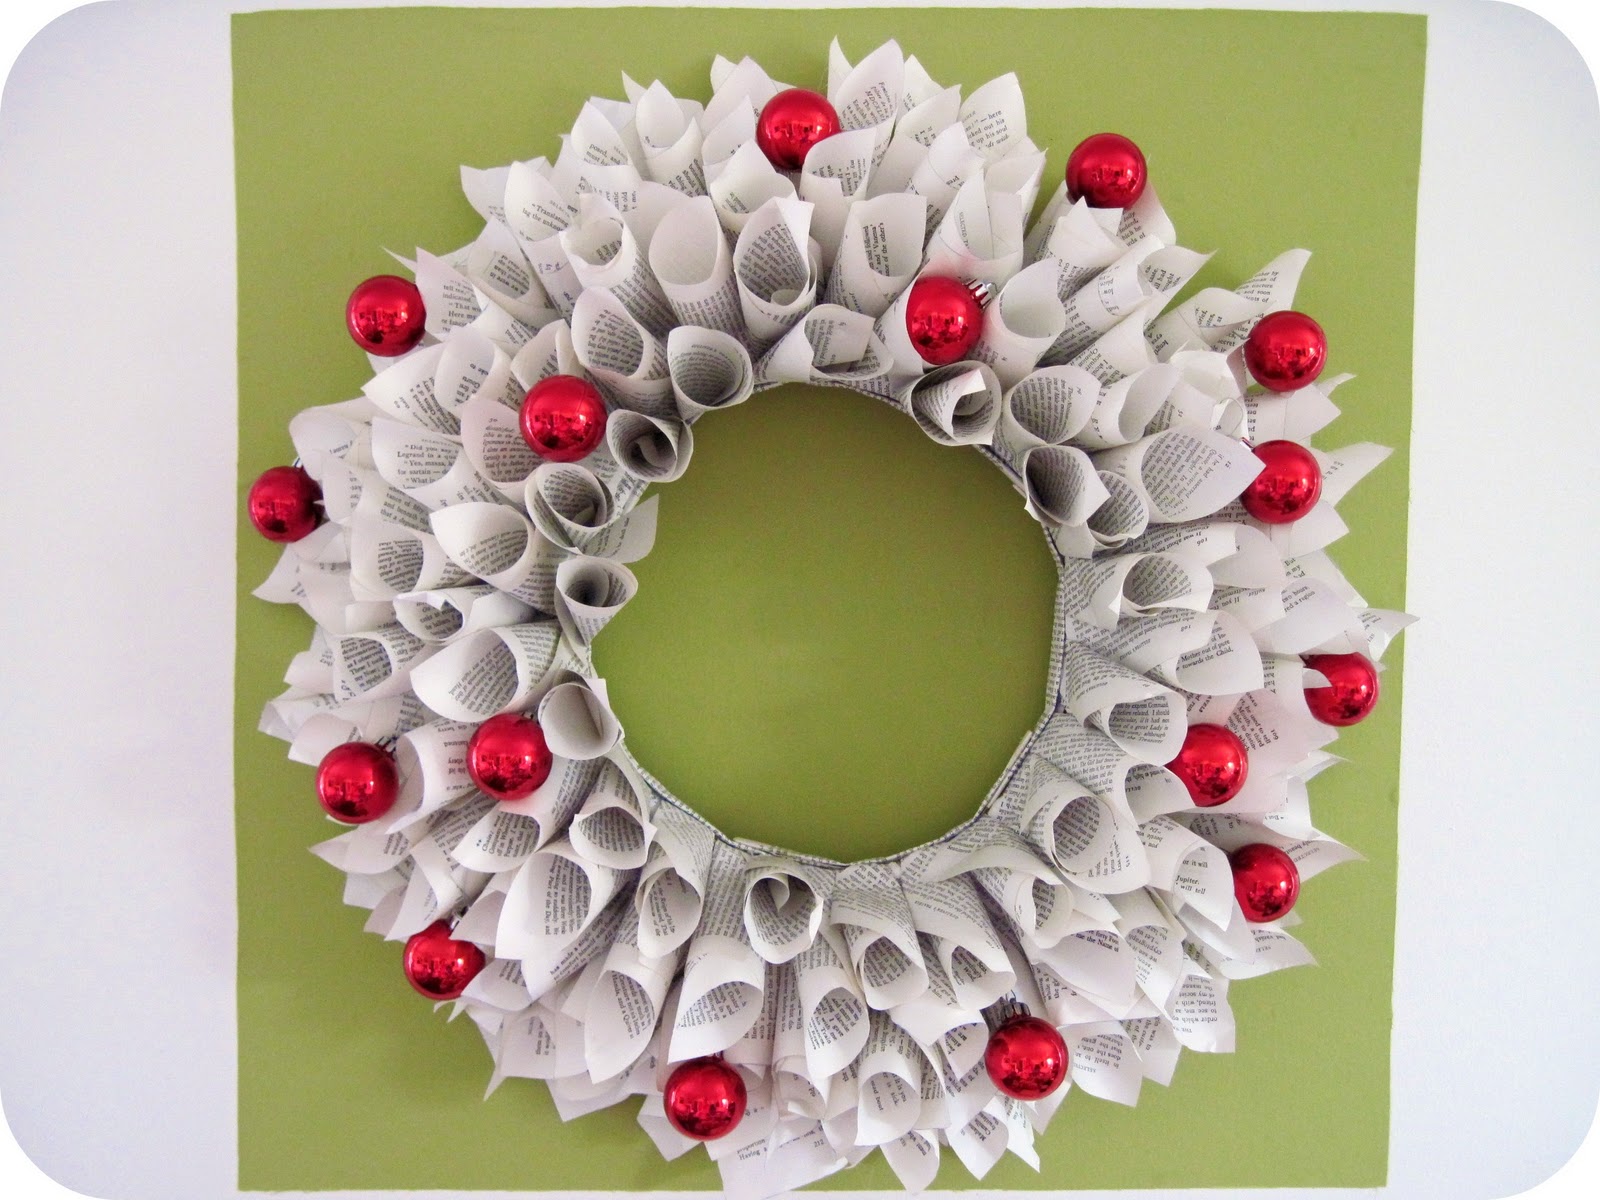 Homemade by jill: holiday cheer book wreath